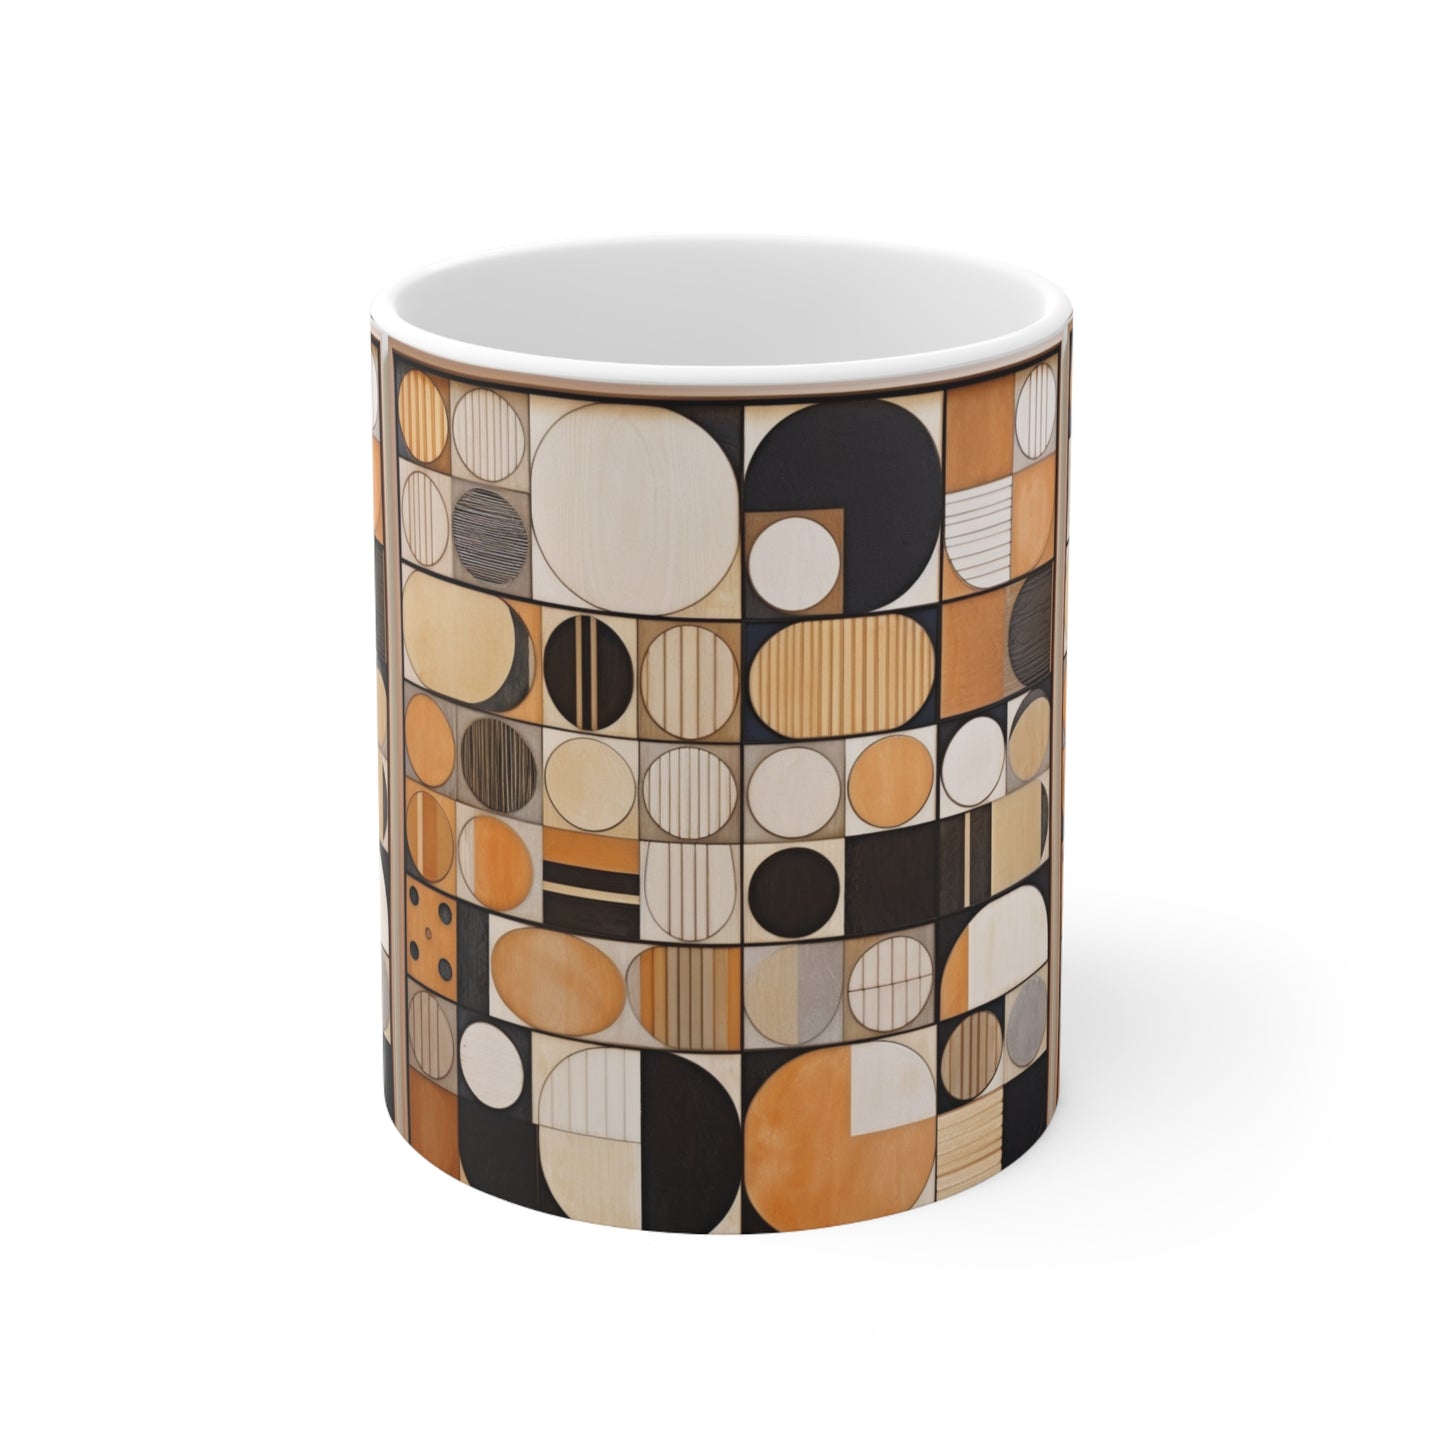 Circular Mosaic Ceramic Mug: Geometric Simplicity in Earthy Tones